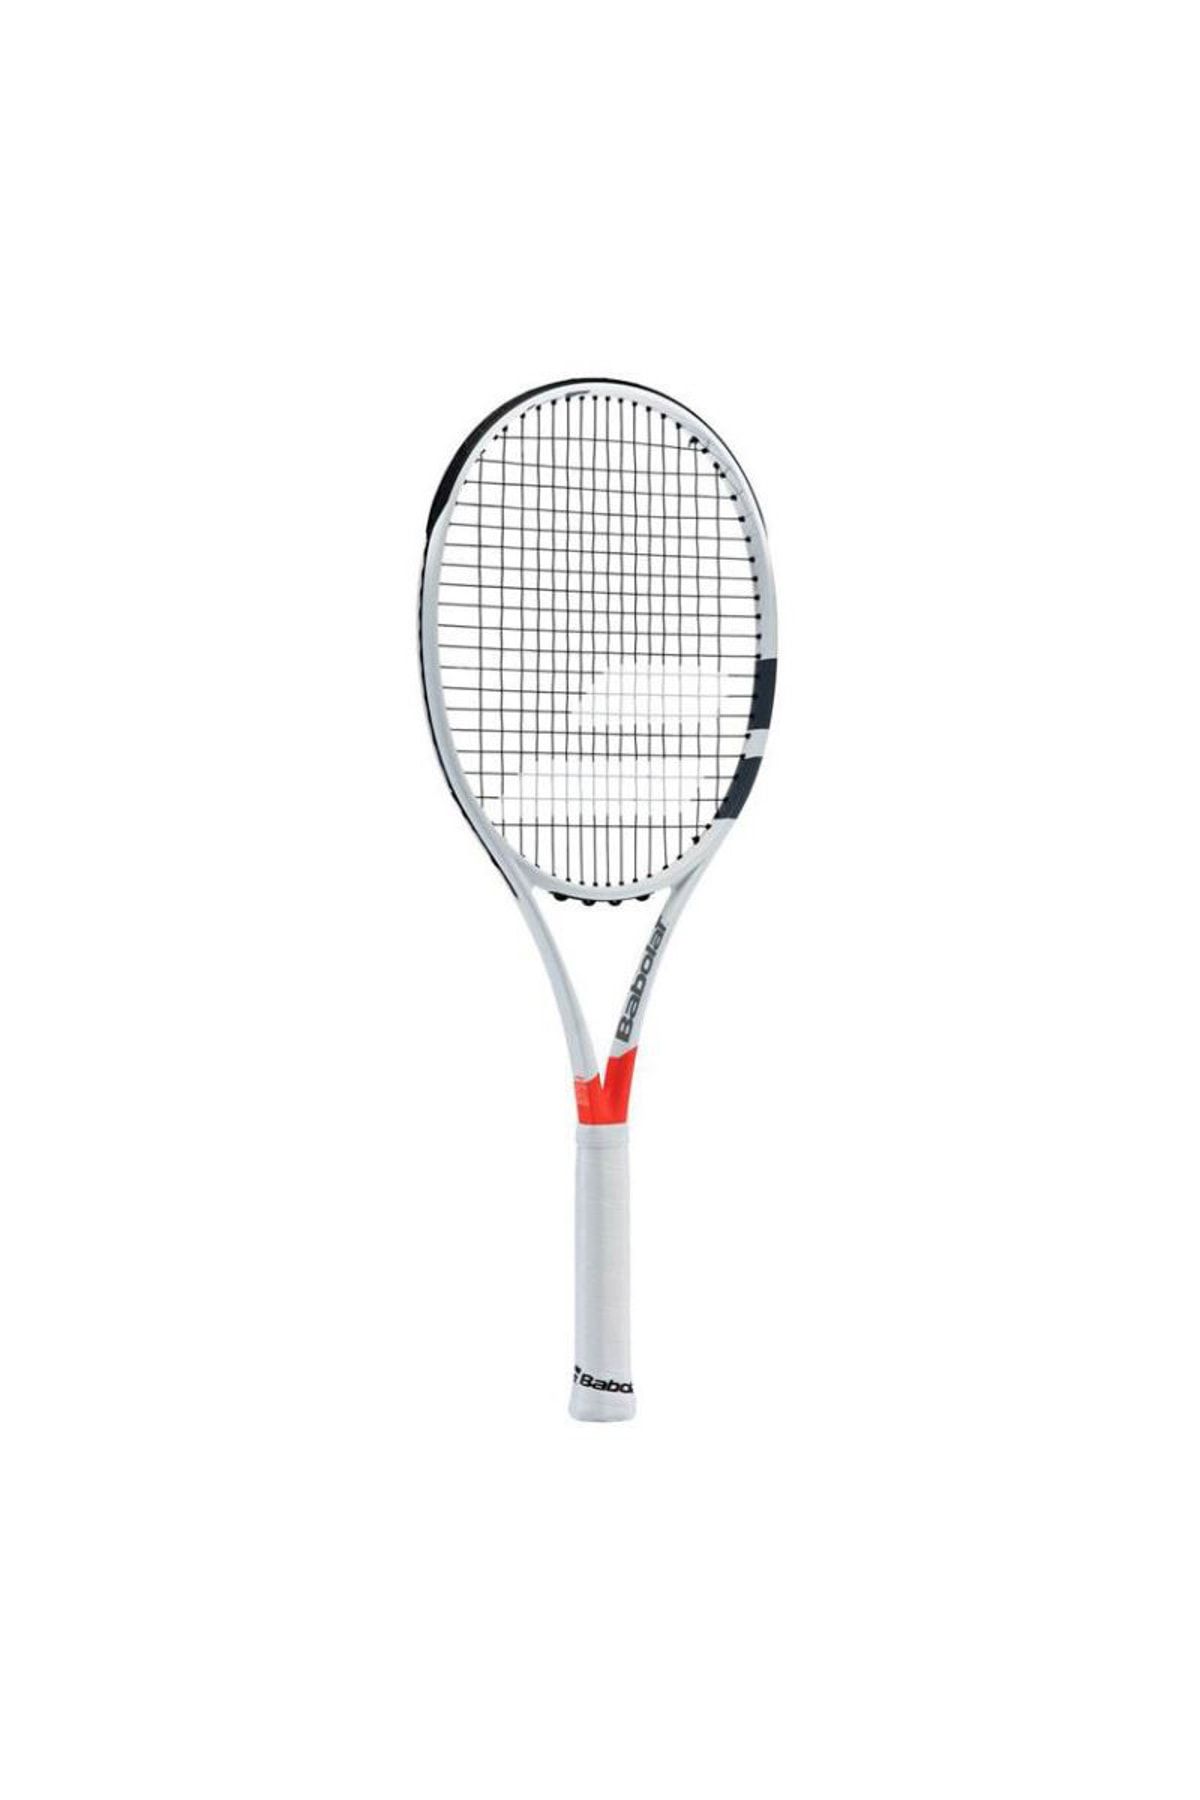 BABOLAT Tenis Raketi Pure Strike 18x20 - Kordajsız